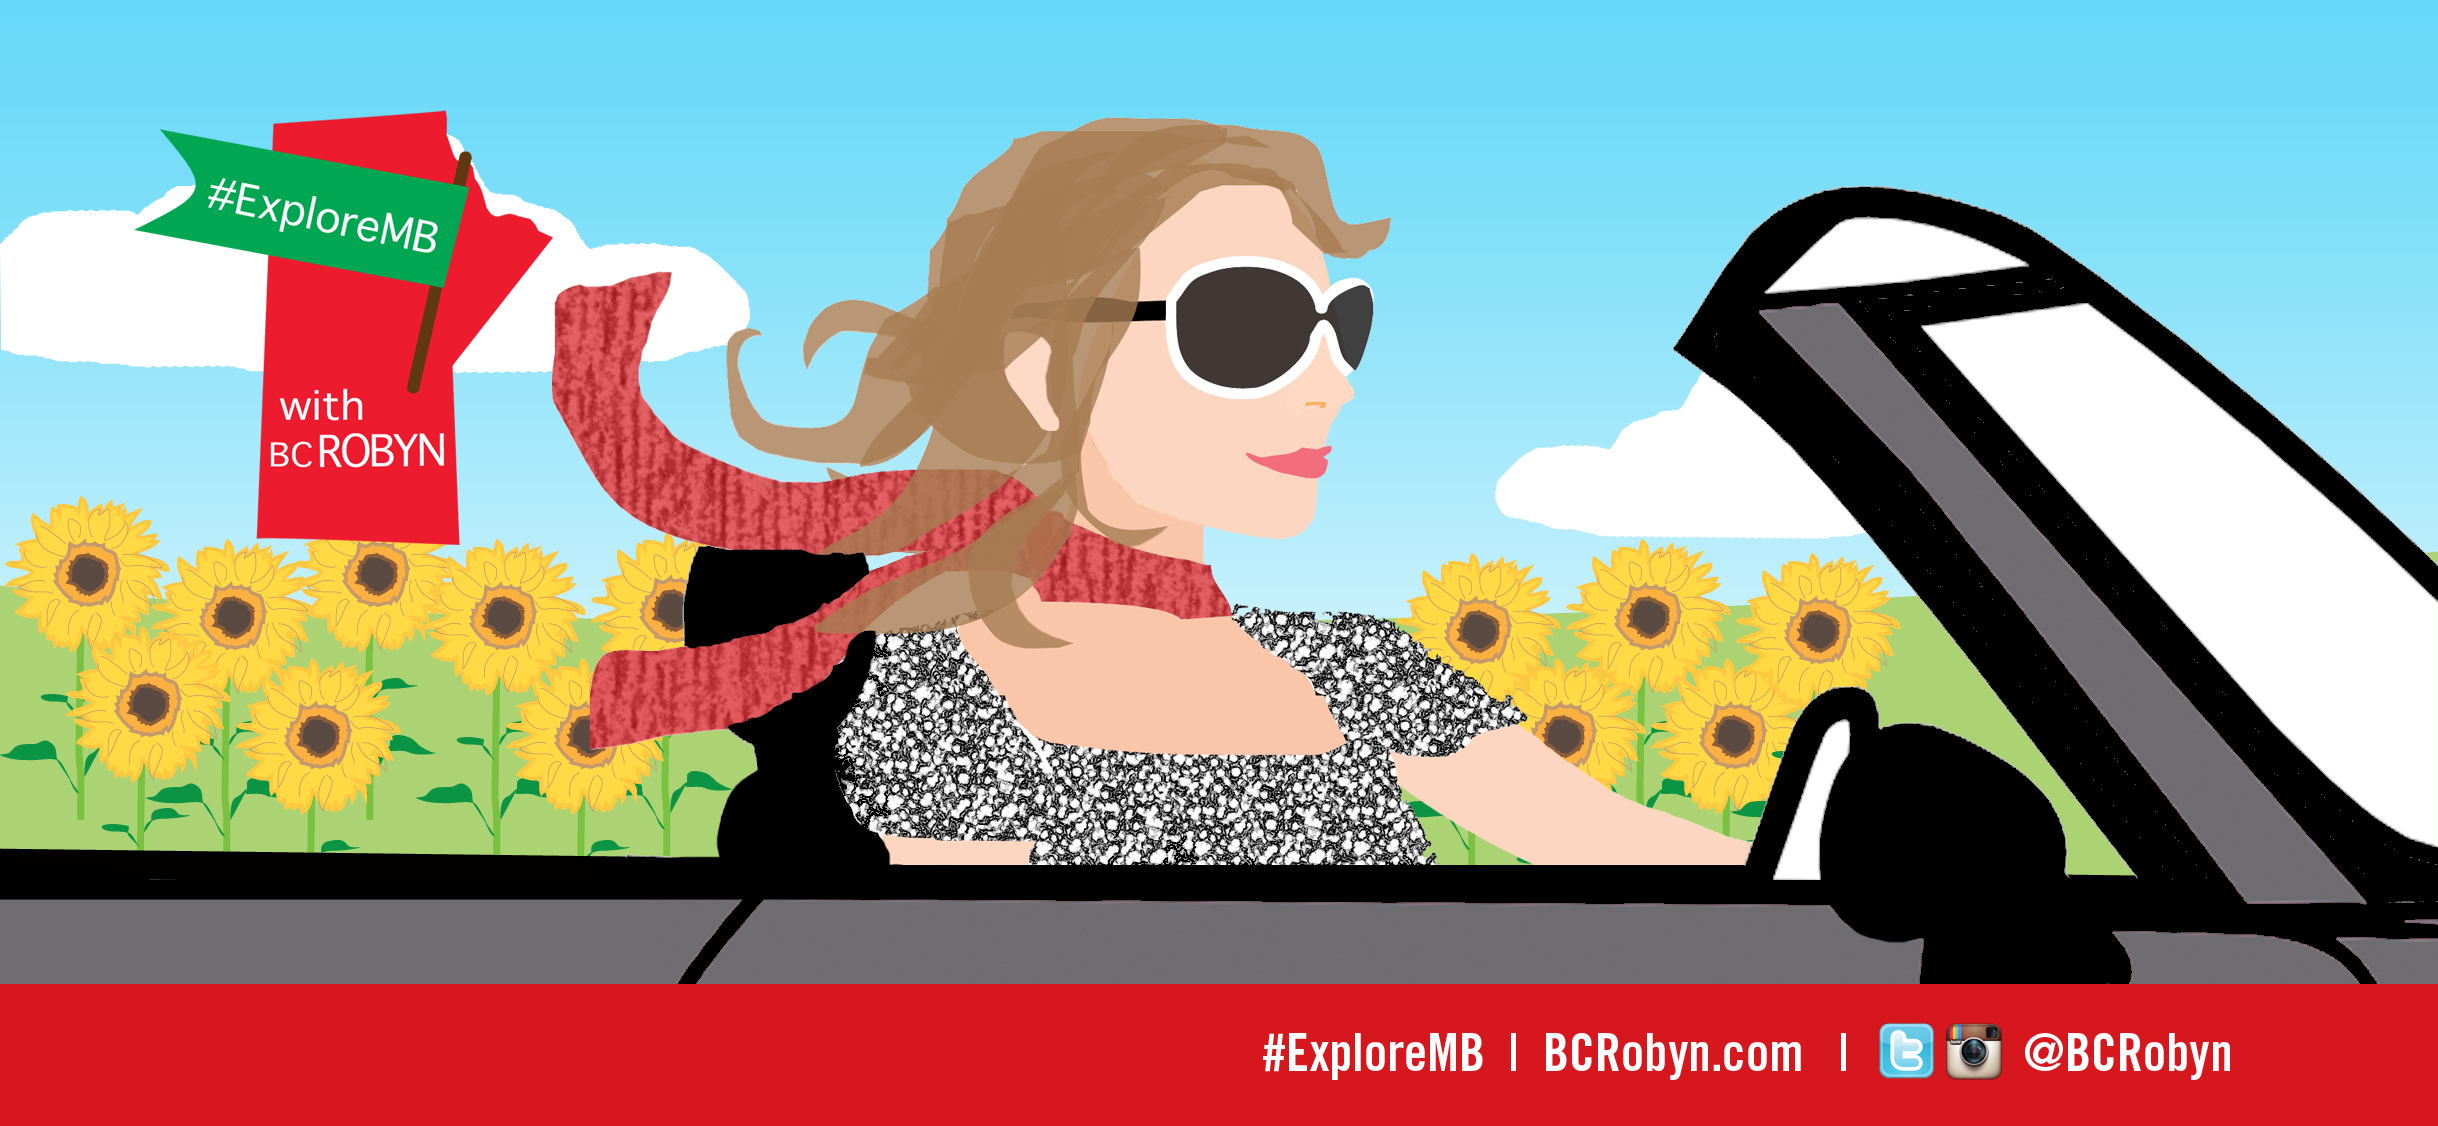 #ExploreMB with BCRobyn